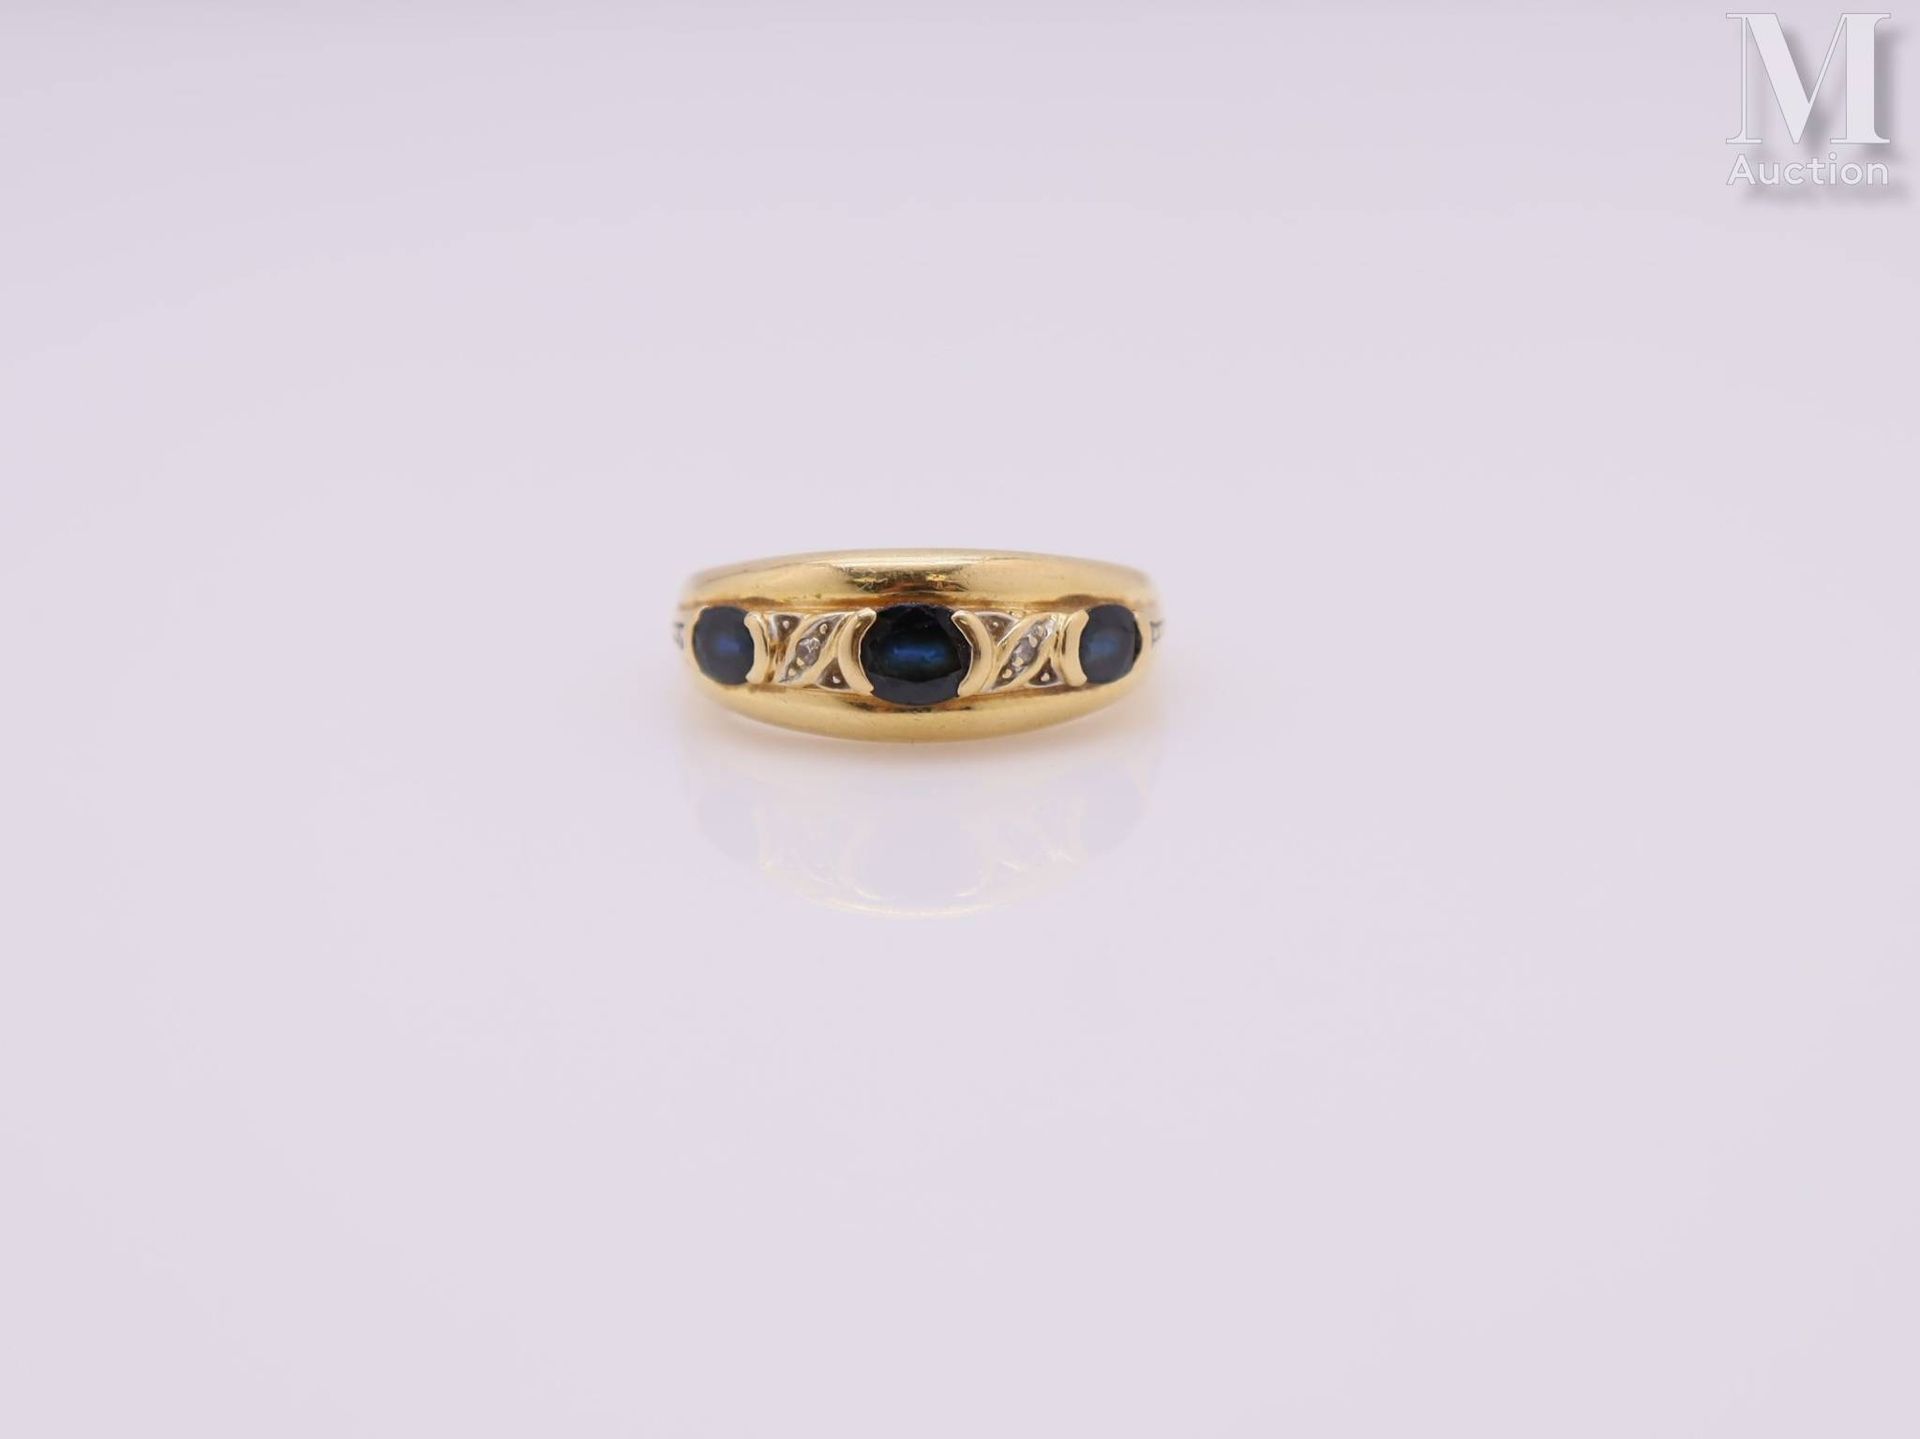 Bague jonc saphirs ovales 18K黄金戒指（千分之七十五），镶有三颗椭圆形蓝宝石，与小钻石交替排列。
毛重：3克 - TDD：54